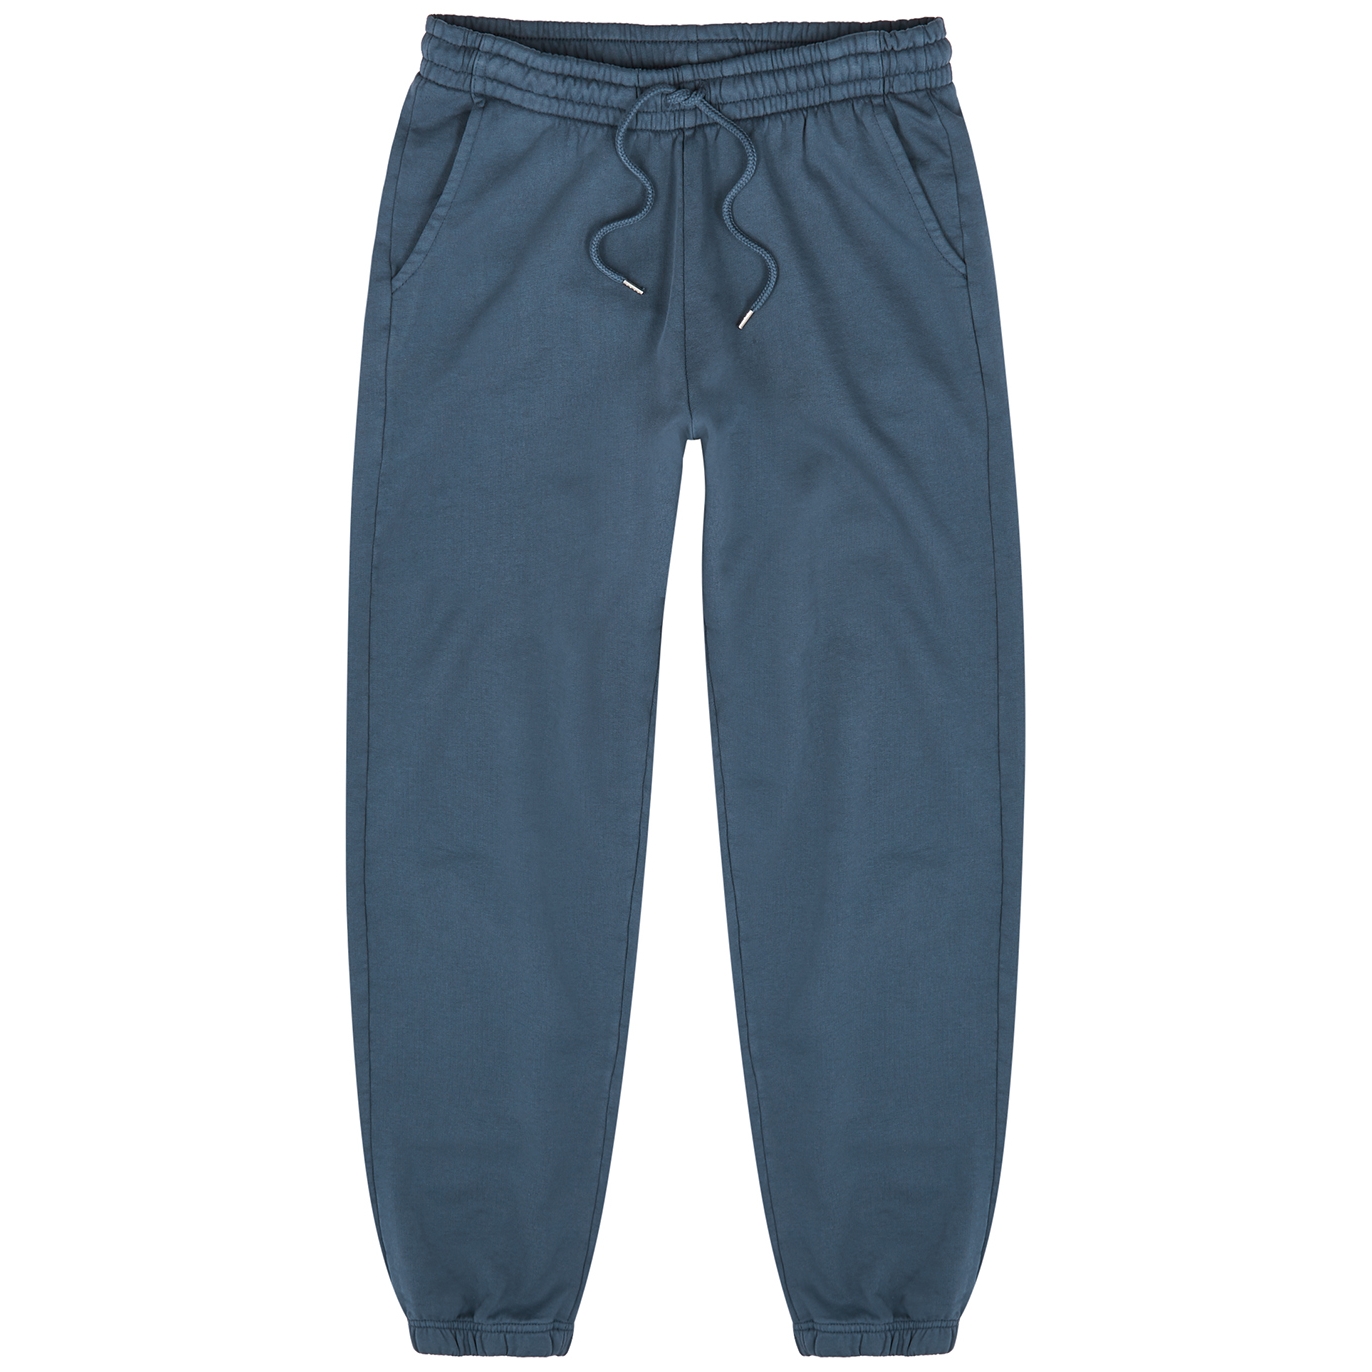 Colorful Standard Dark Blue Cotton Sweatpants - L